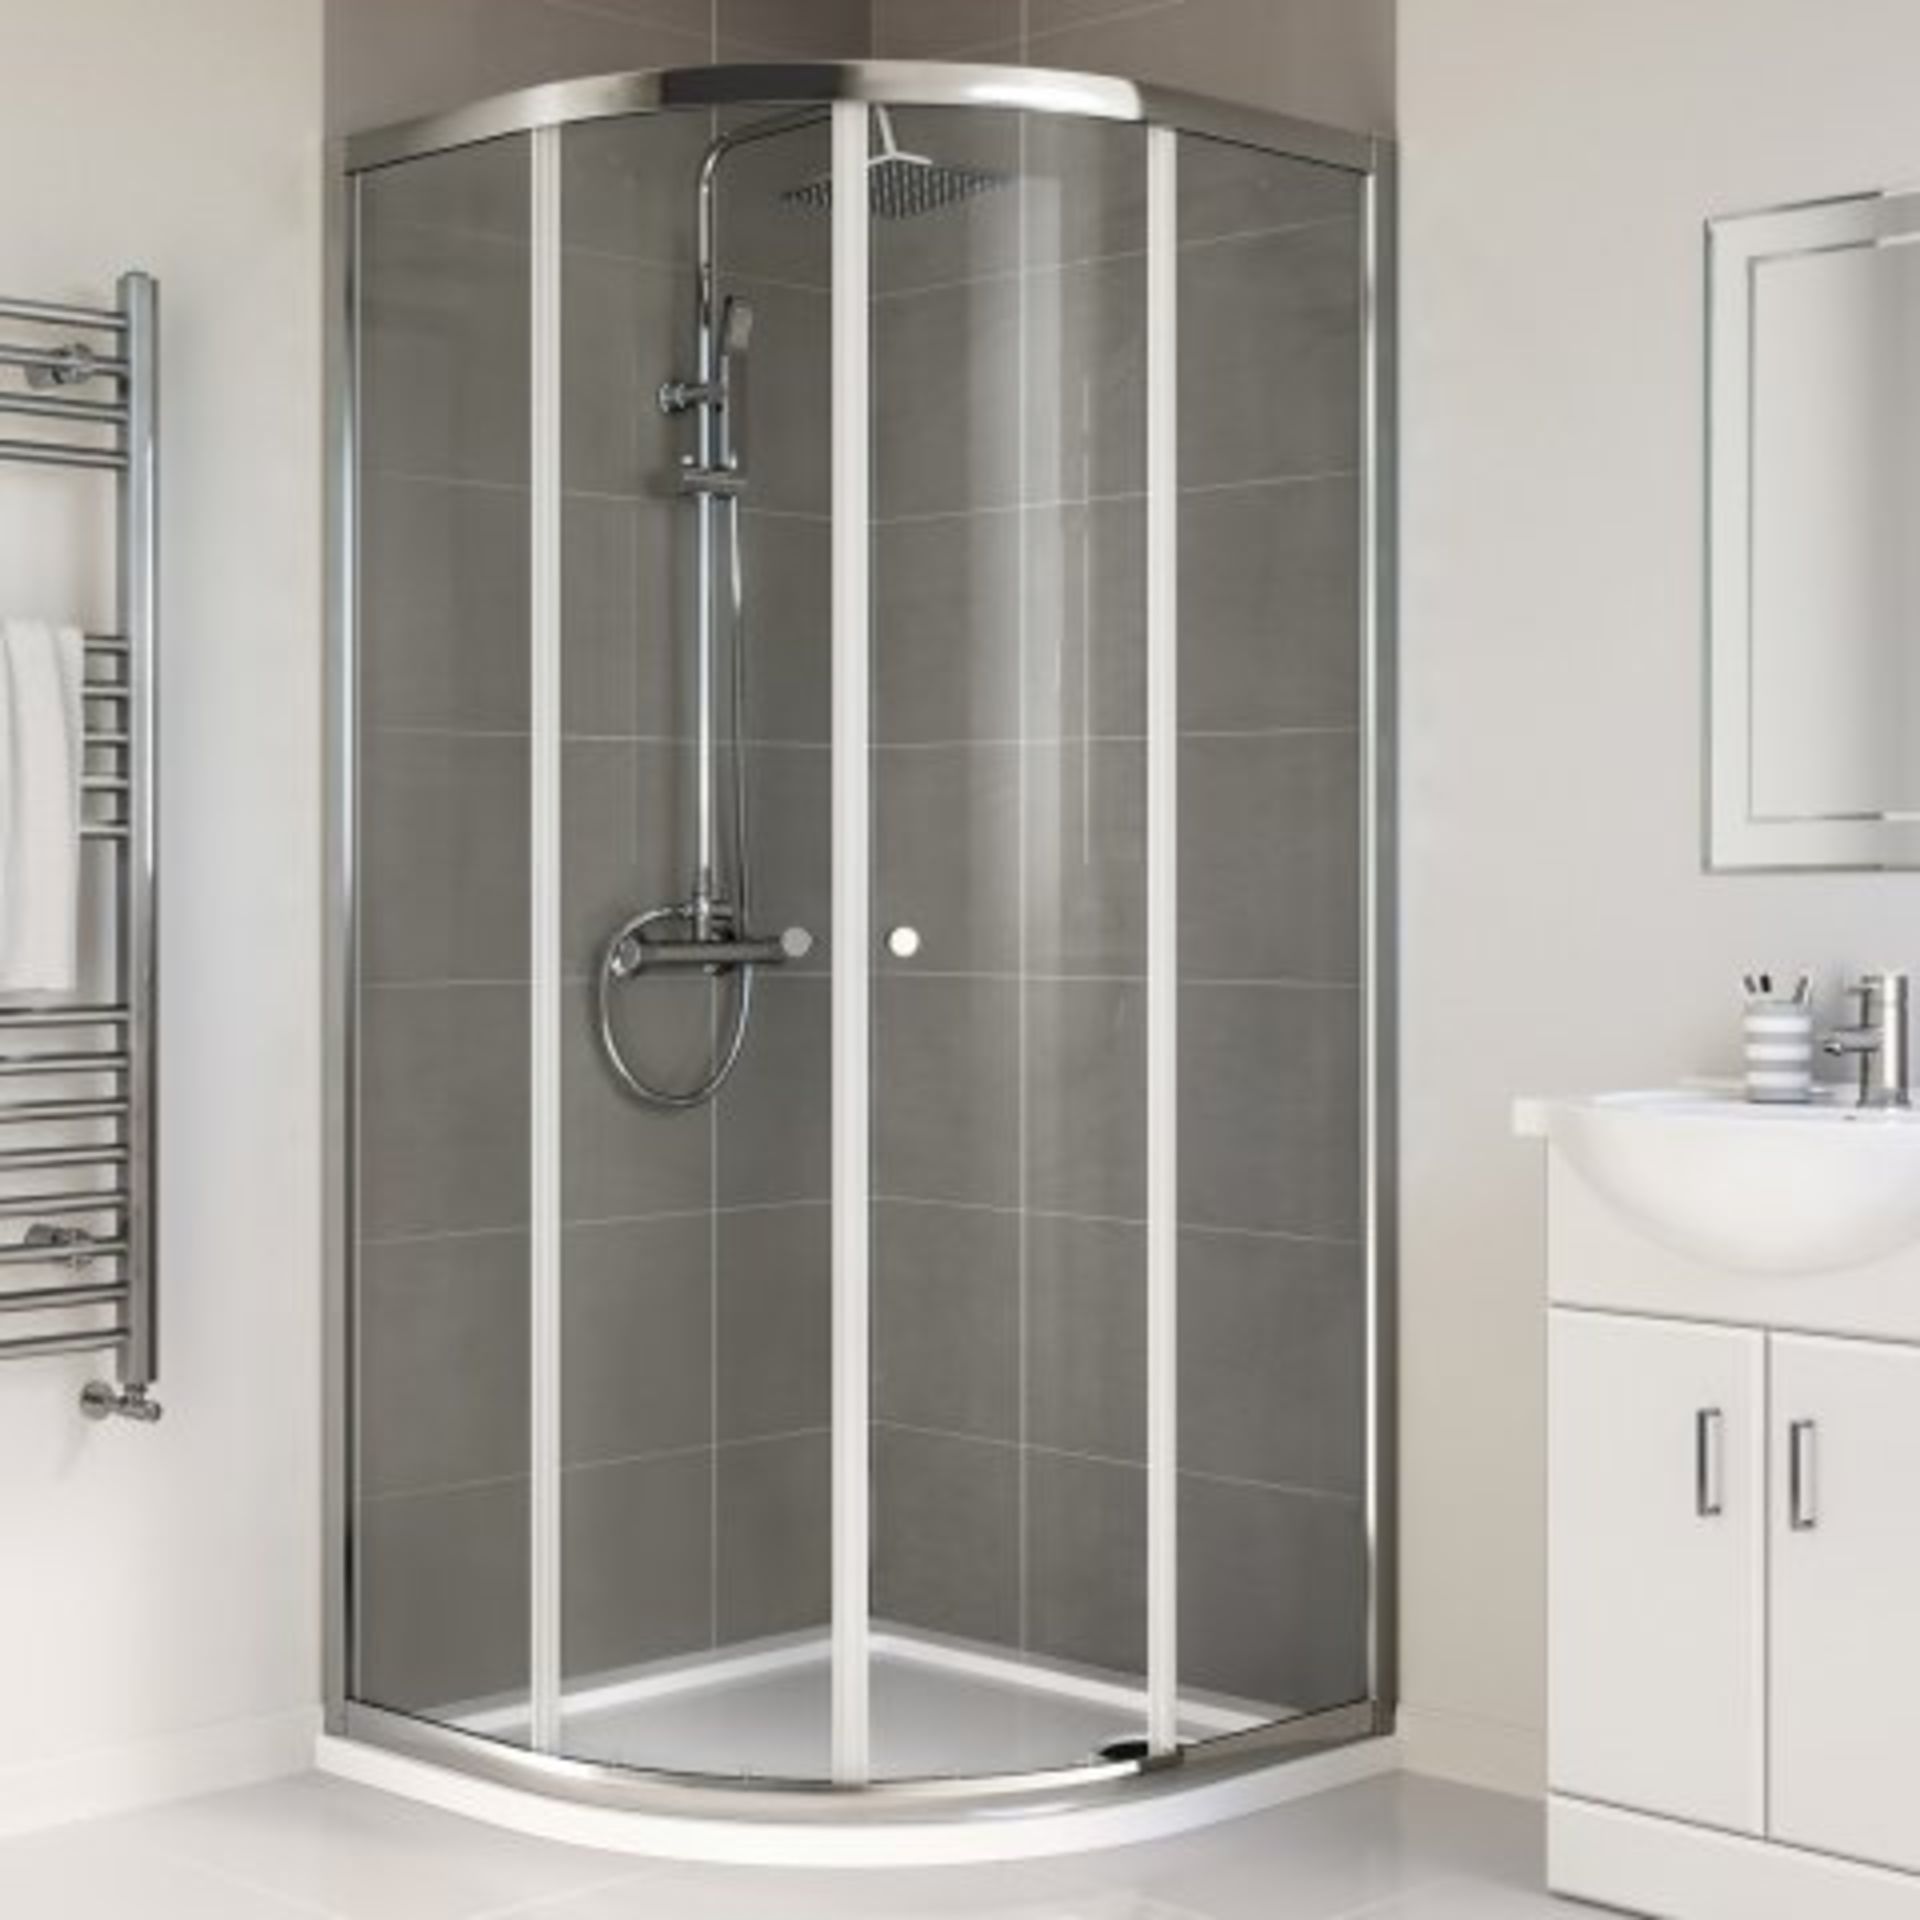 NEW Twyfords 800x800mm - Elements Quadrant Shower Enclosure. RRP £429.99.Shower Enclosures fe... - Image 3 of 3